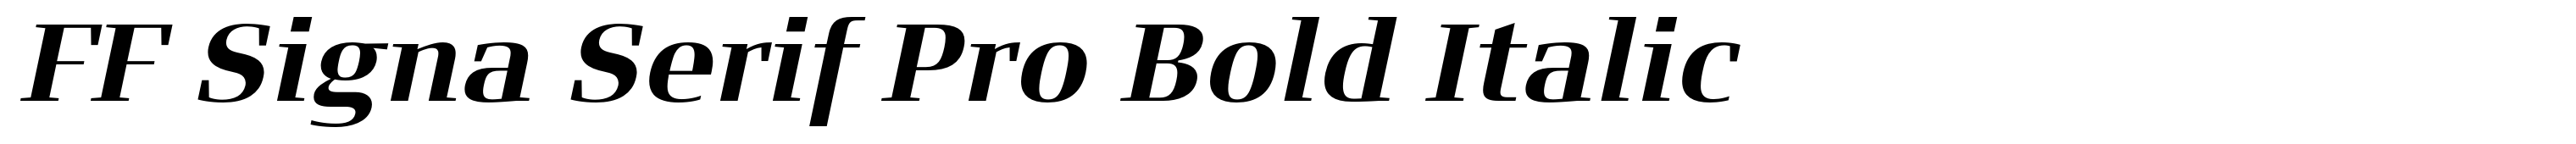 FF Signa Serif Pro Bold Italic